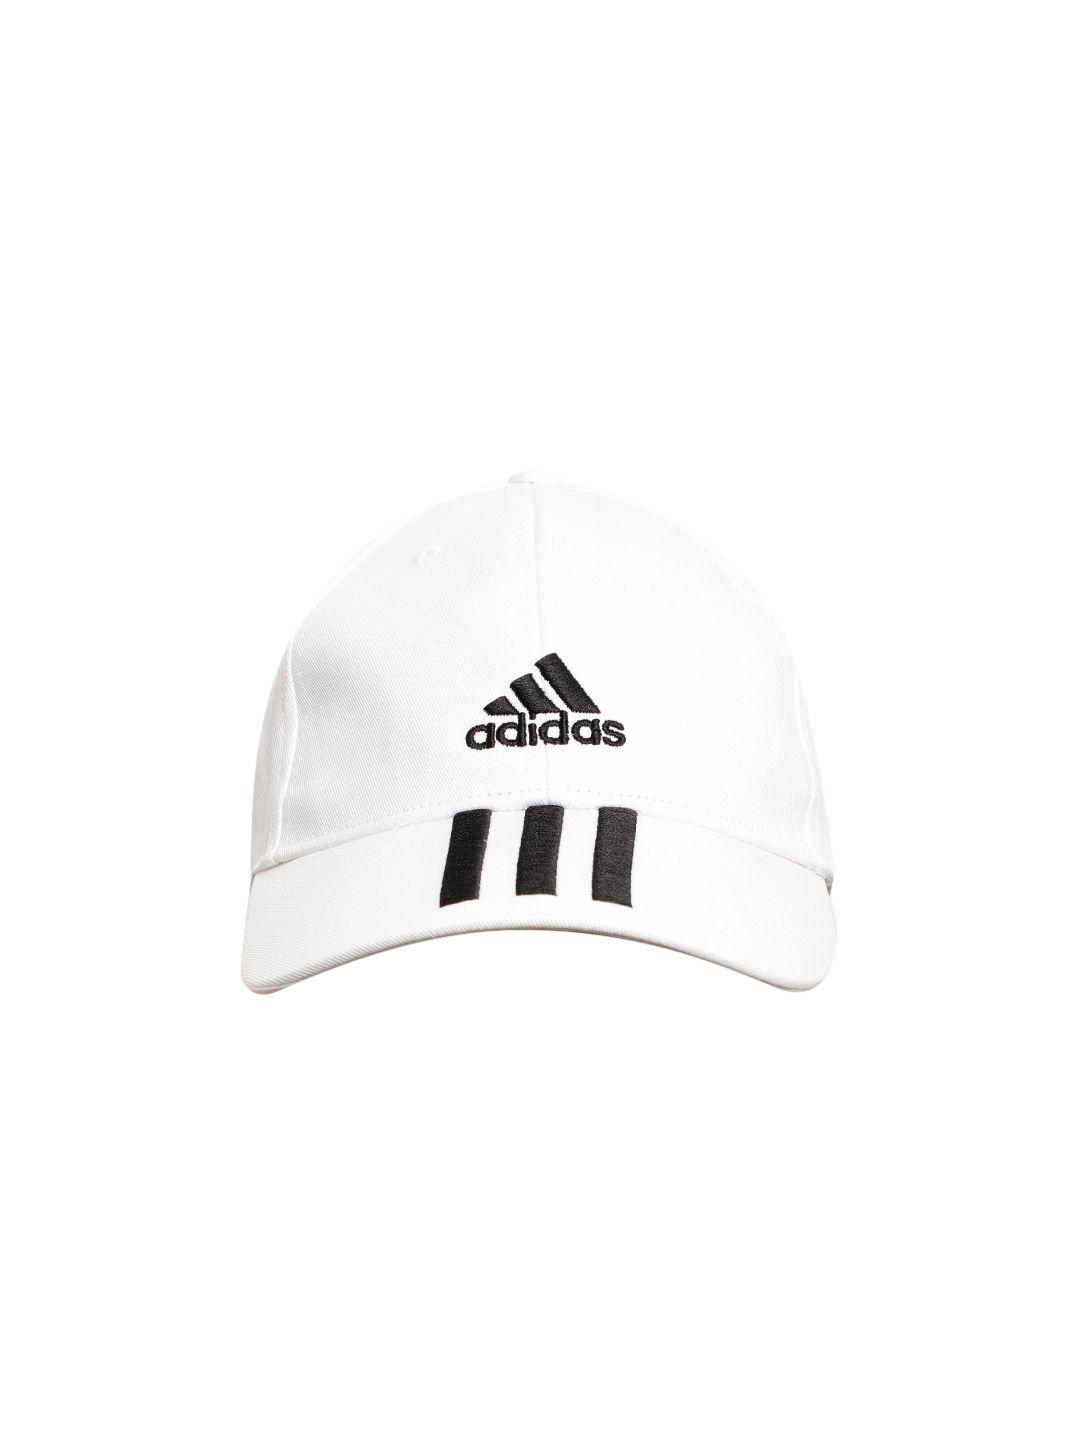 adidas unisex white & black brand logo embroidered visor cap